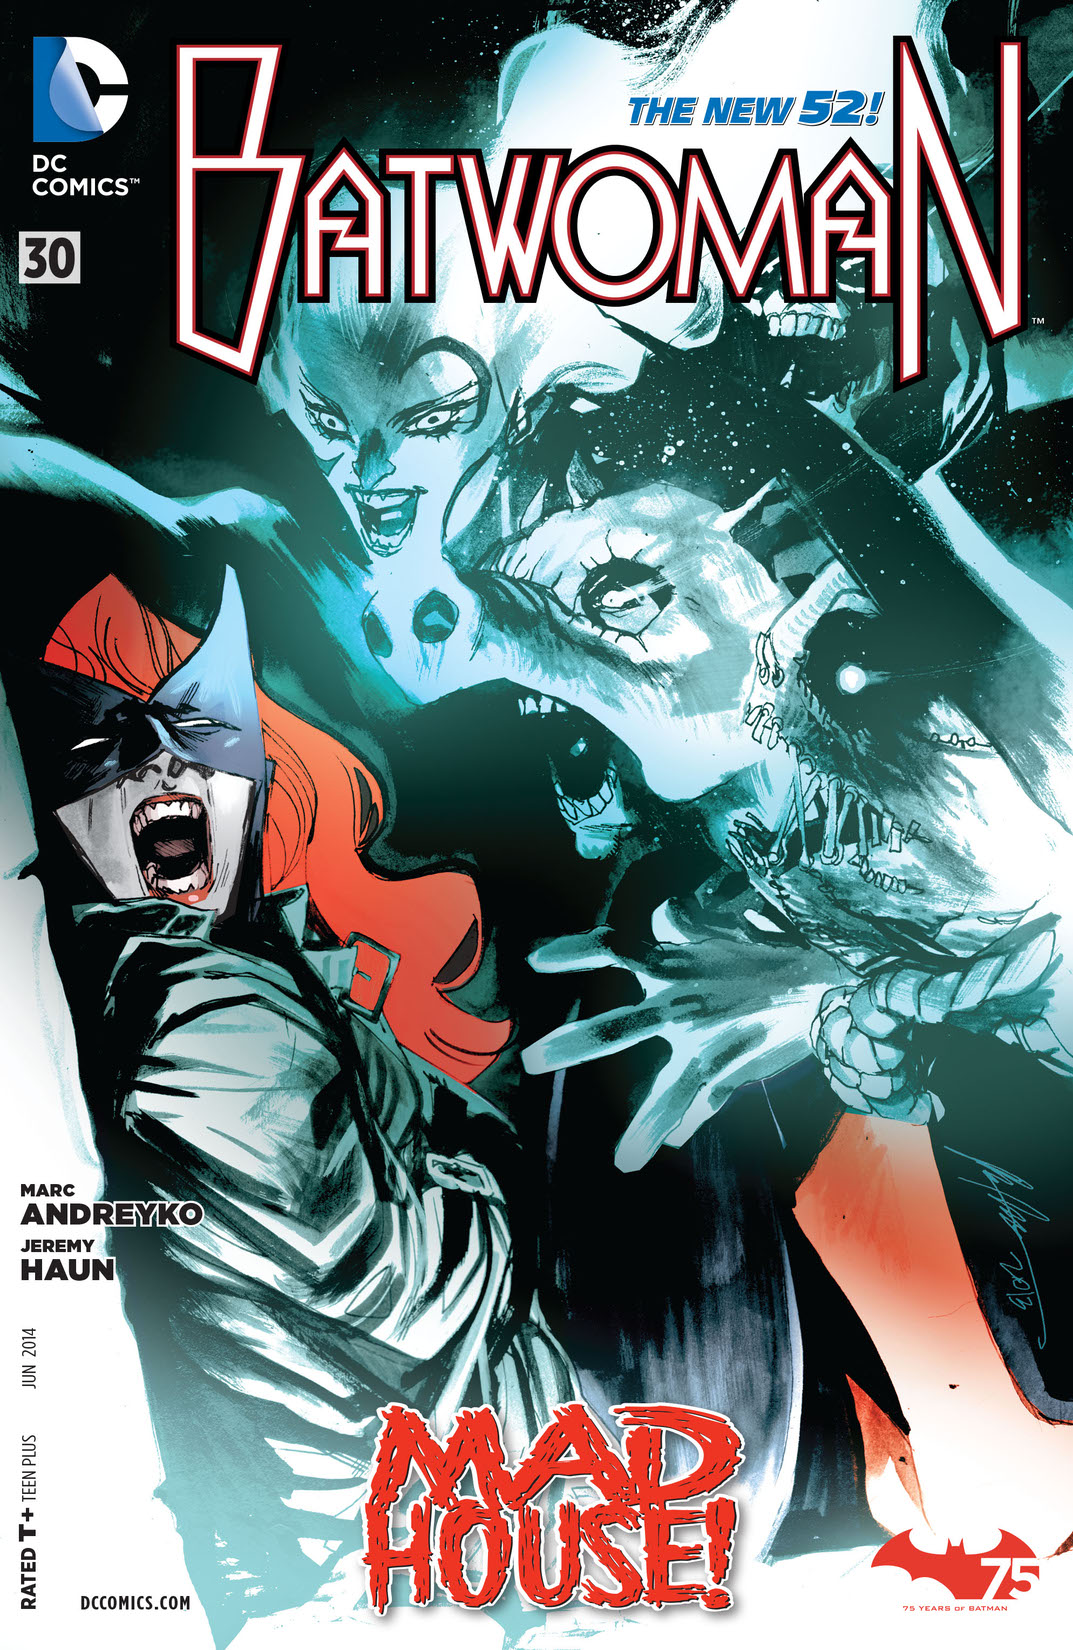 Batwoman (2011-) #30 preview images